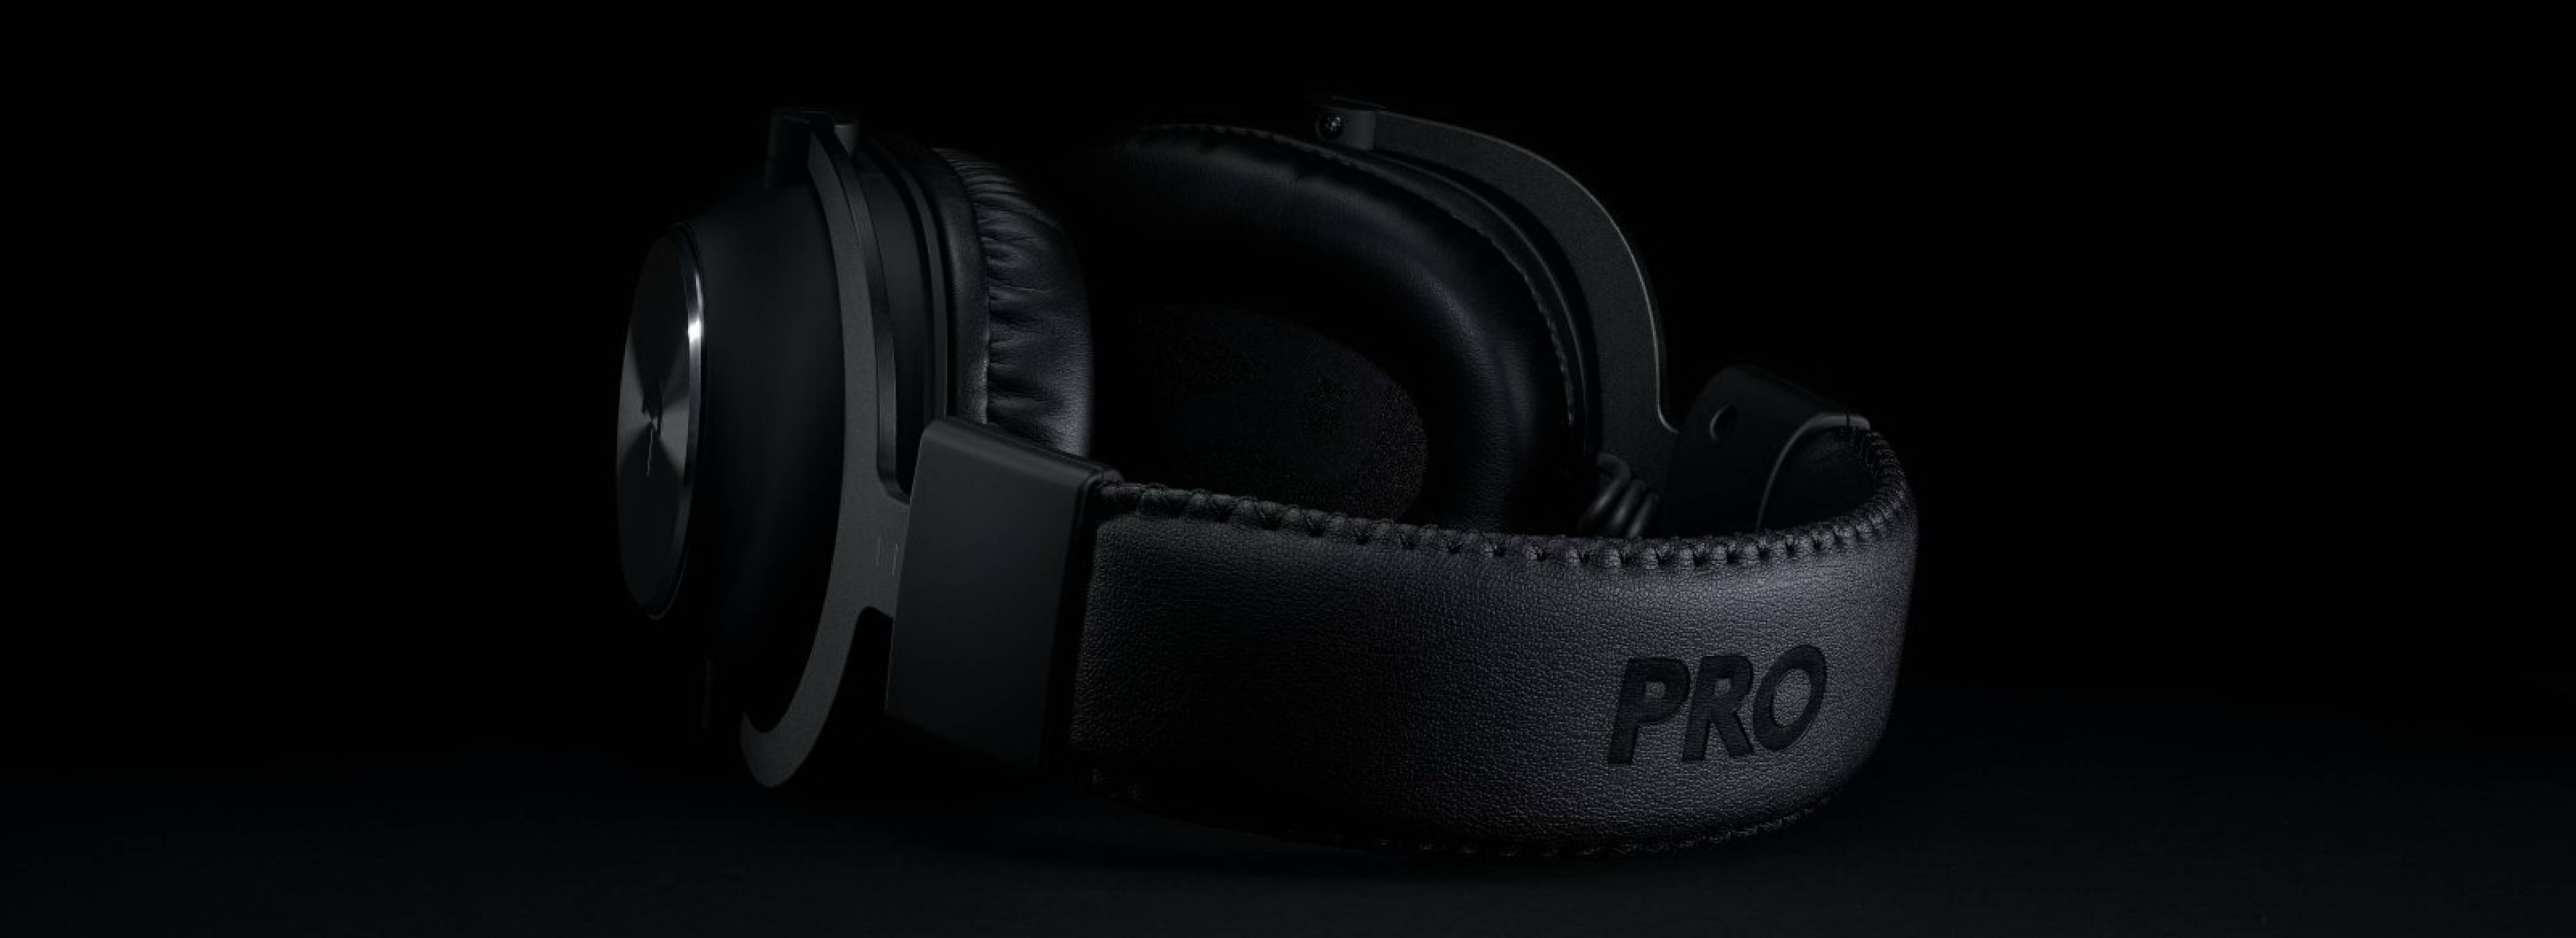 G Pro X Wireless: безжични геймърски слушалки от висок клас (РЕВЮ)